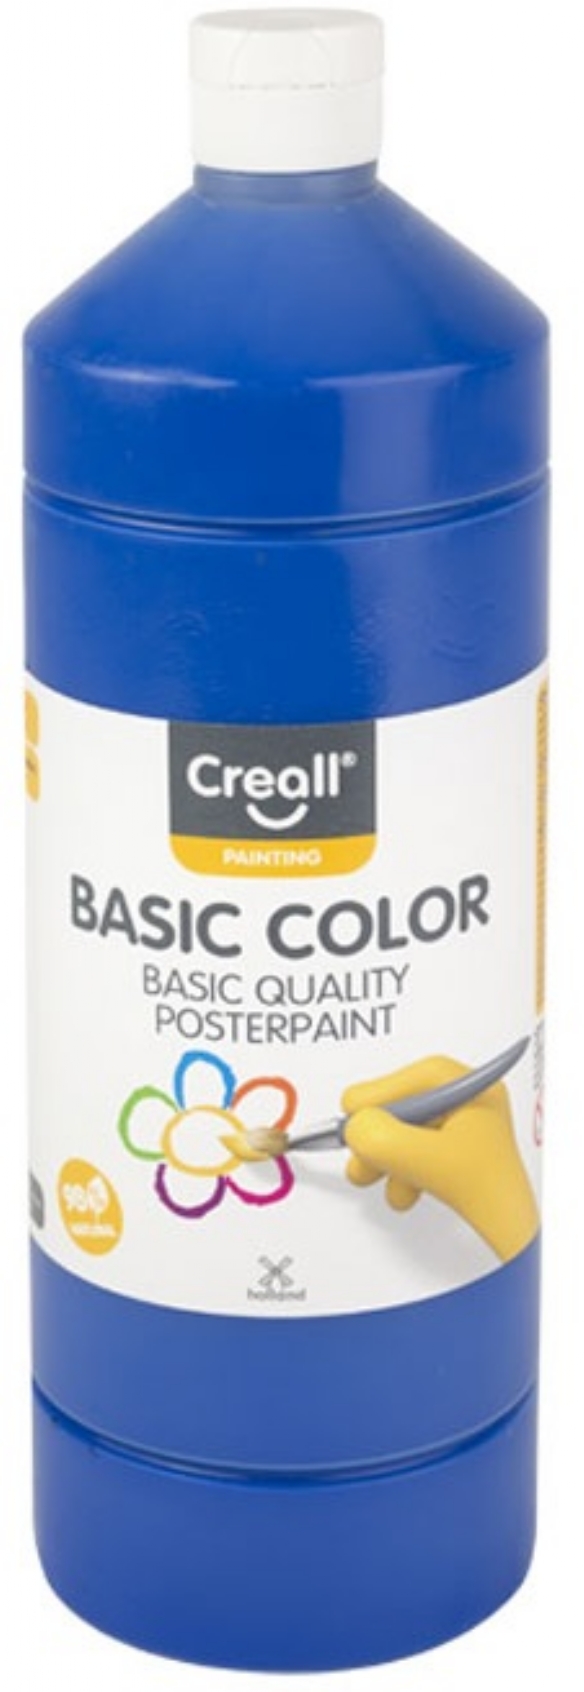 Basic-color plakkaatverf, 1000 ml, 12 koningsblauw kopen?